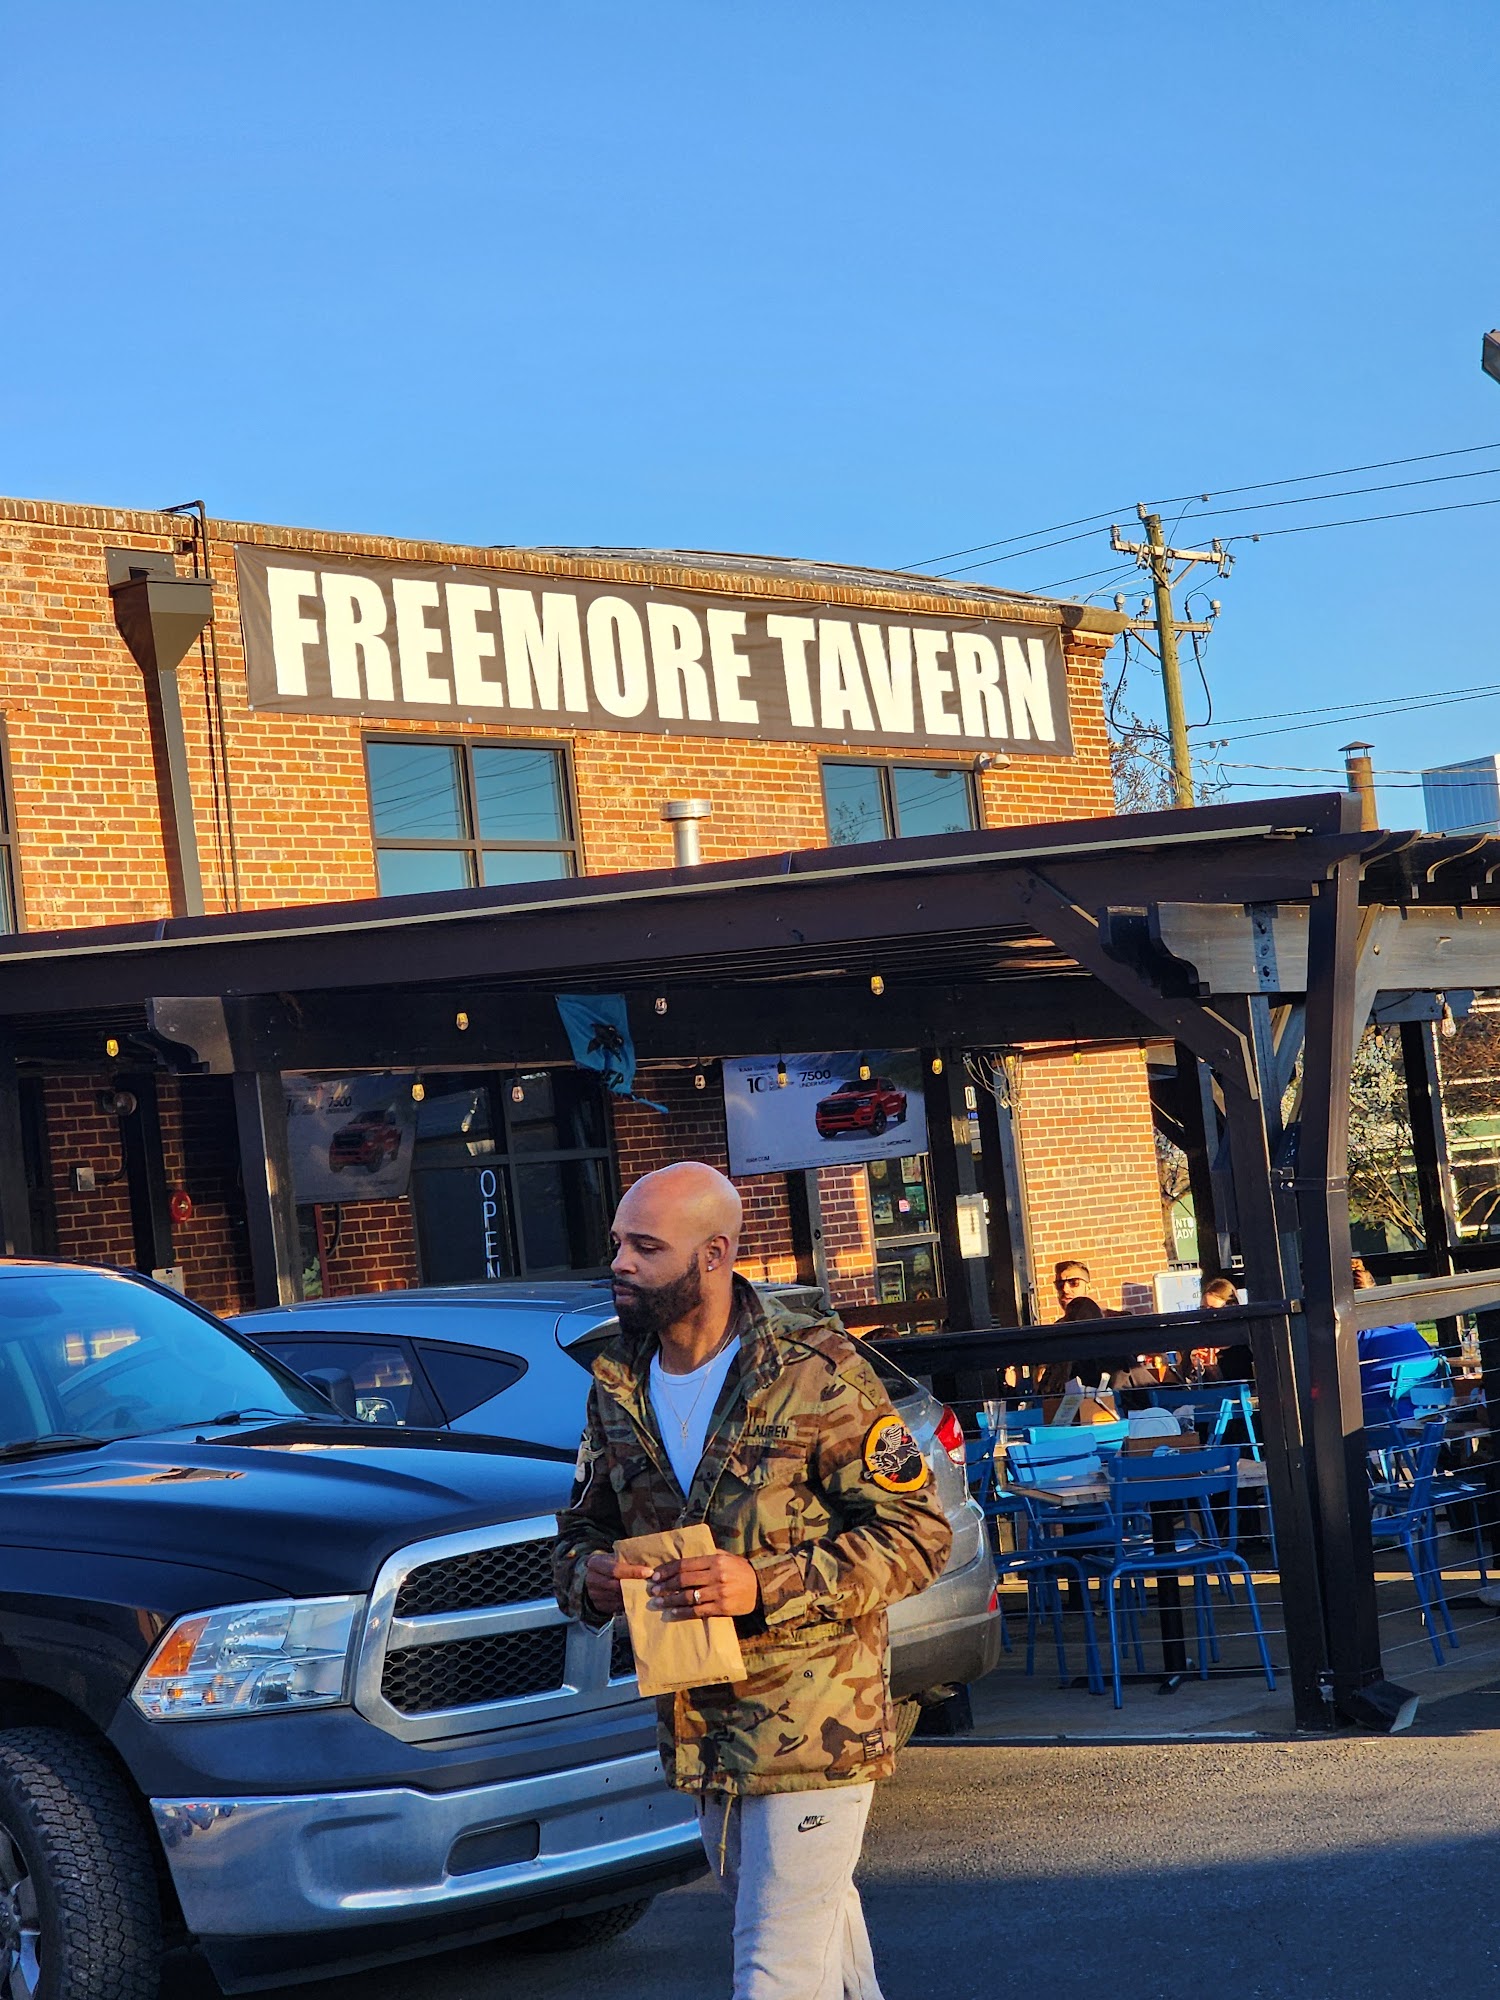 FreeMore Tavern